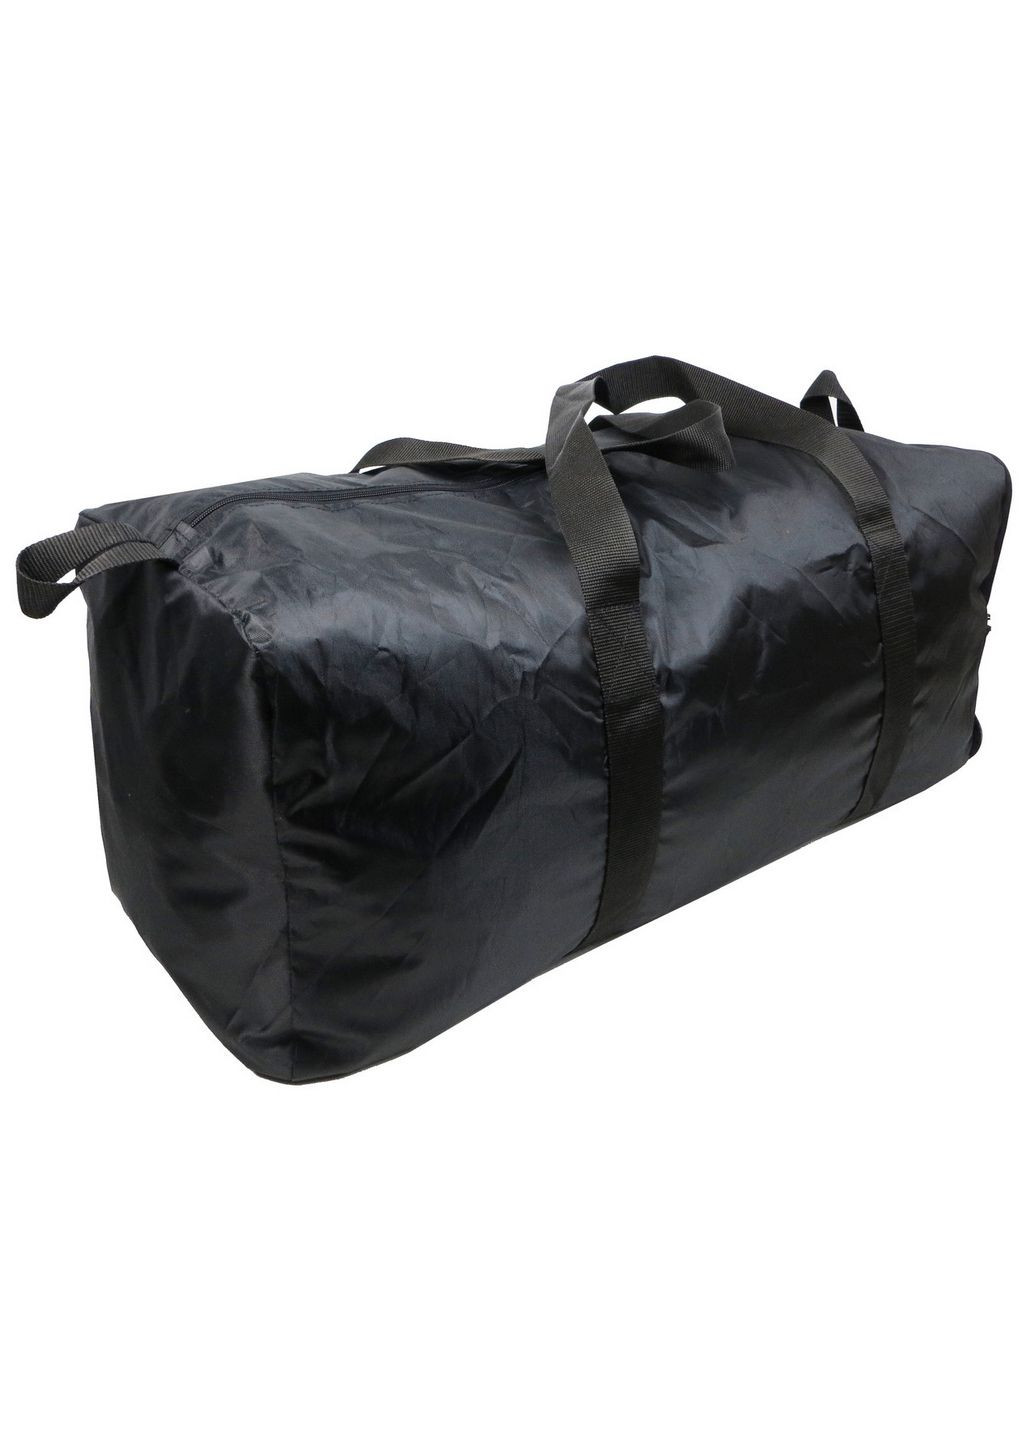 Большая складная дорожная сумка, баул 58 л Proflider (288183707)